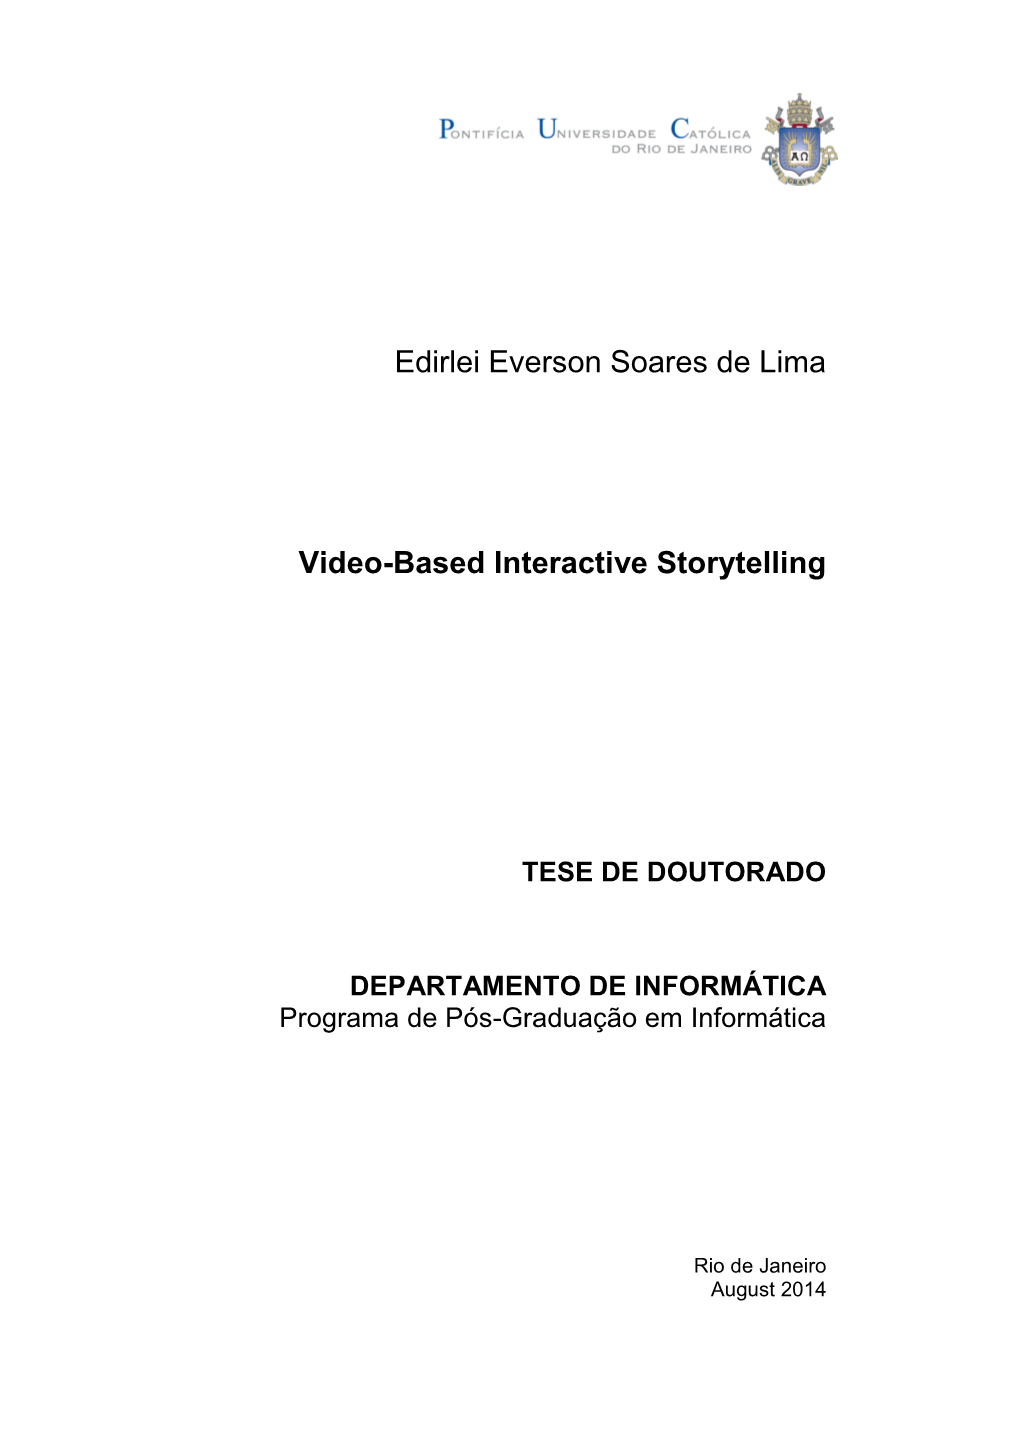 Video-Based Interactive Storytelling